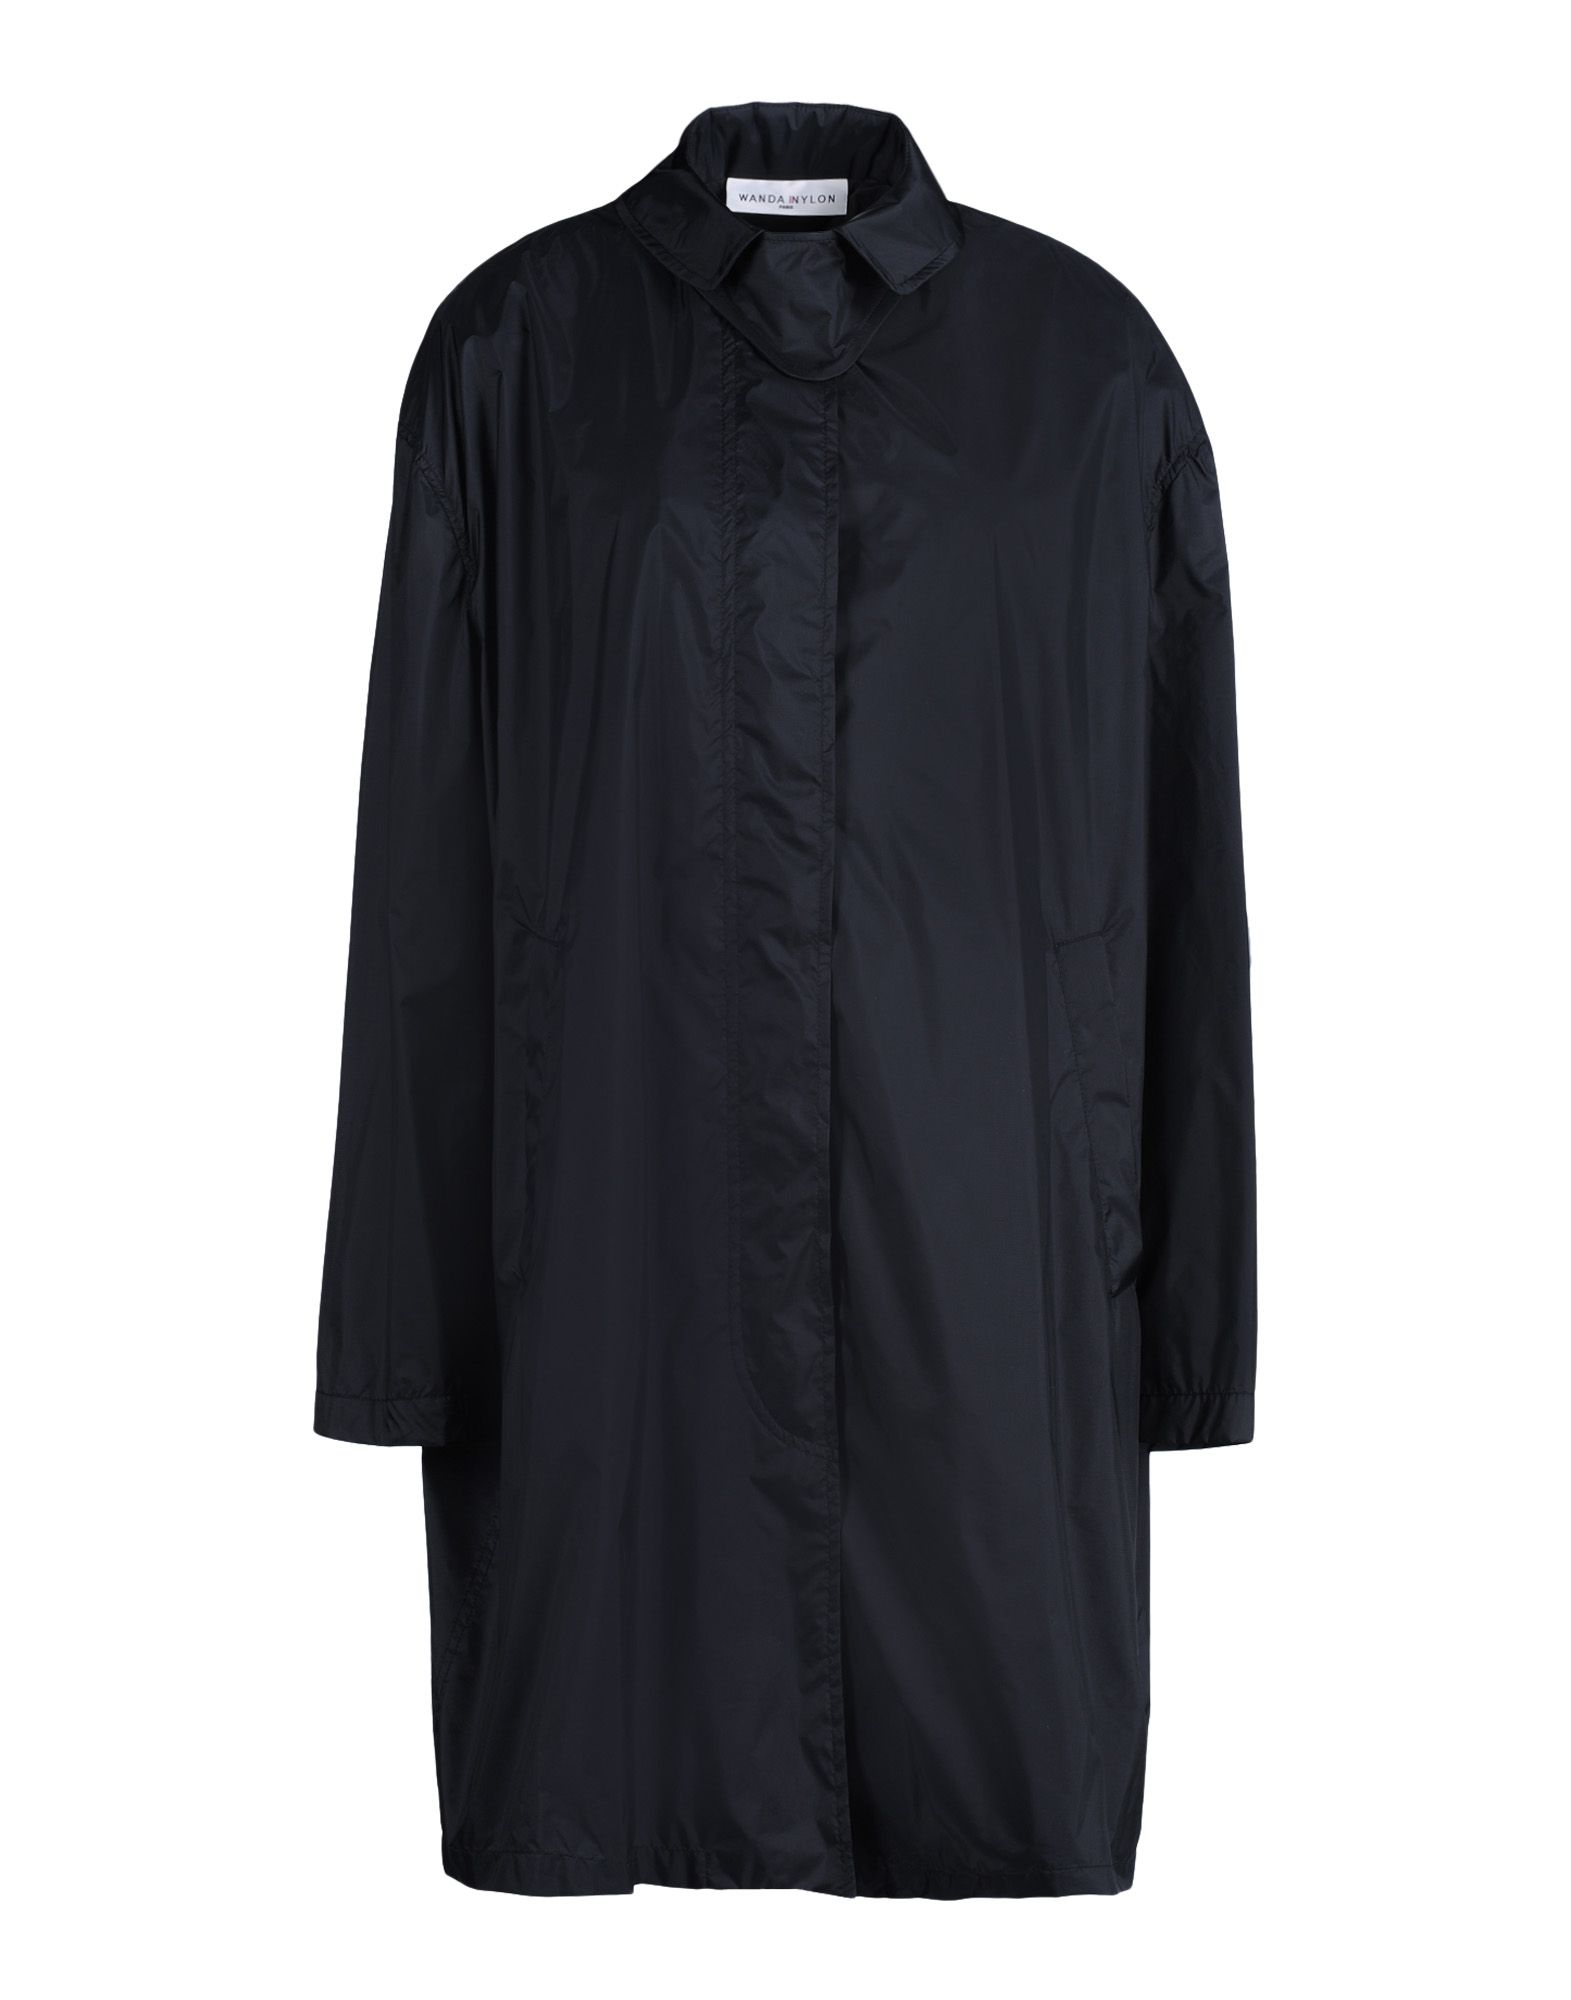 Wanda nylon Full-Length Jacket in Black | Lyst